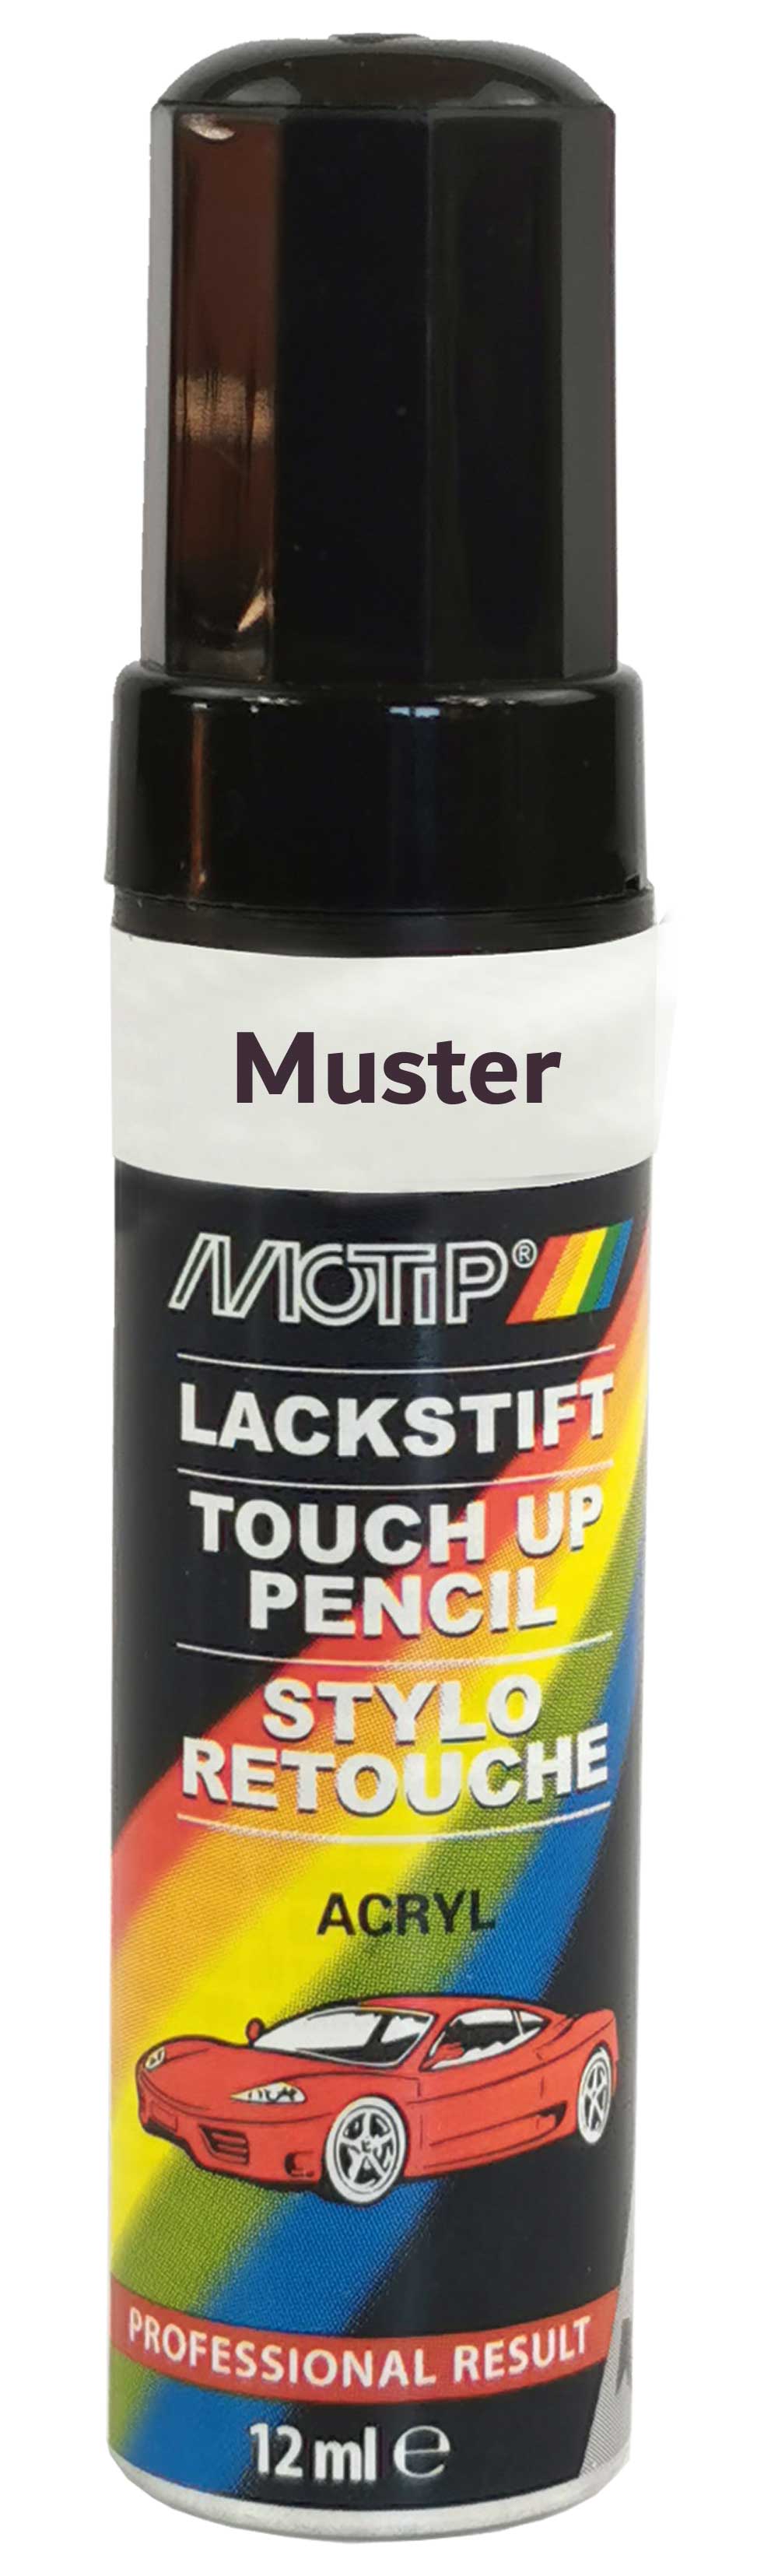 Motip Lack-Stift grau 12ml 951028